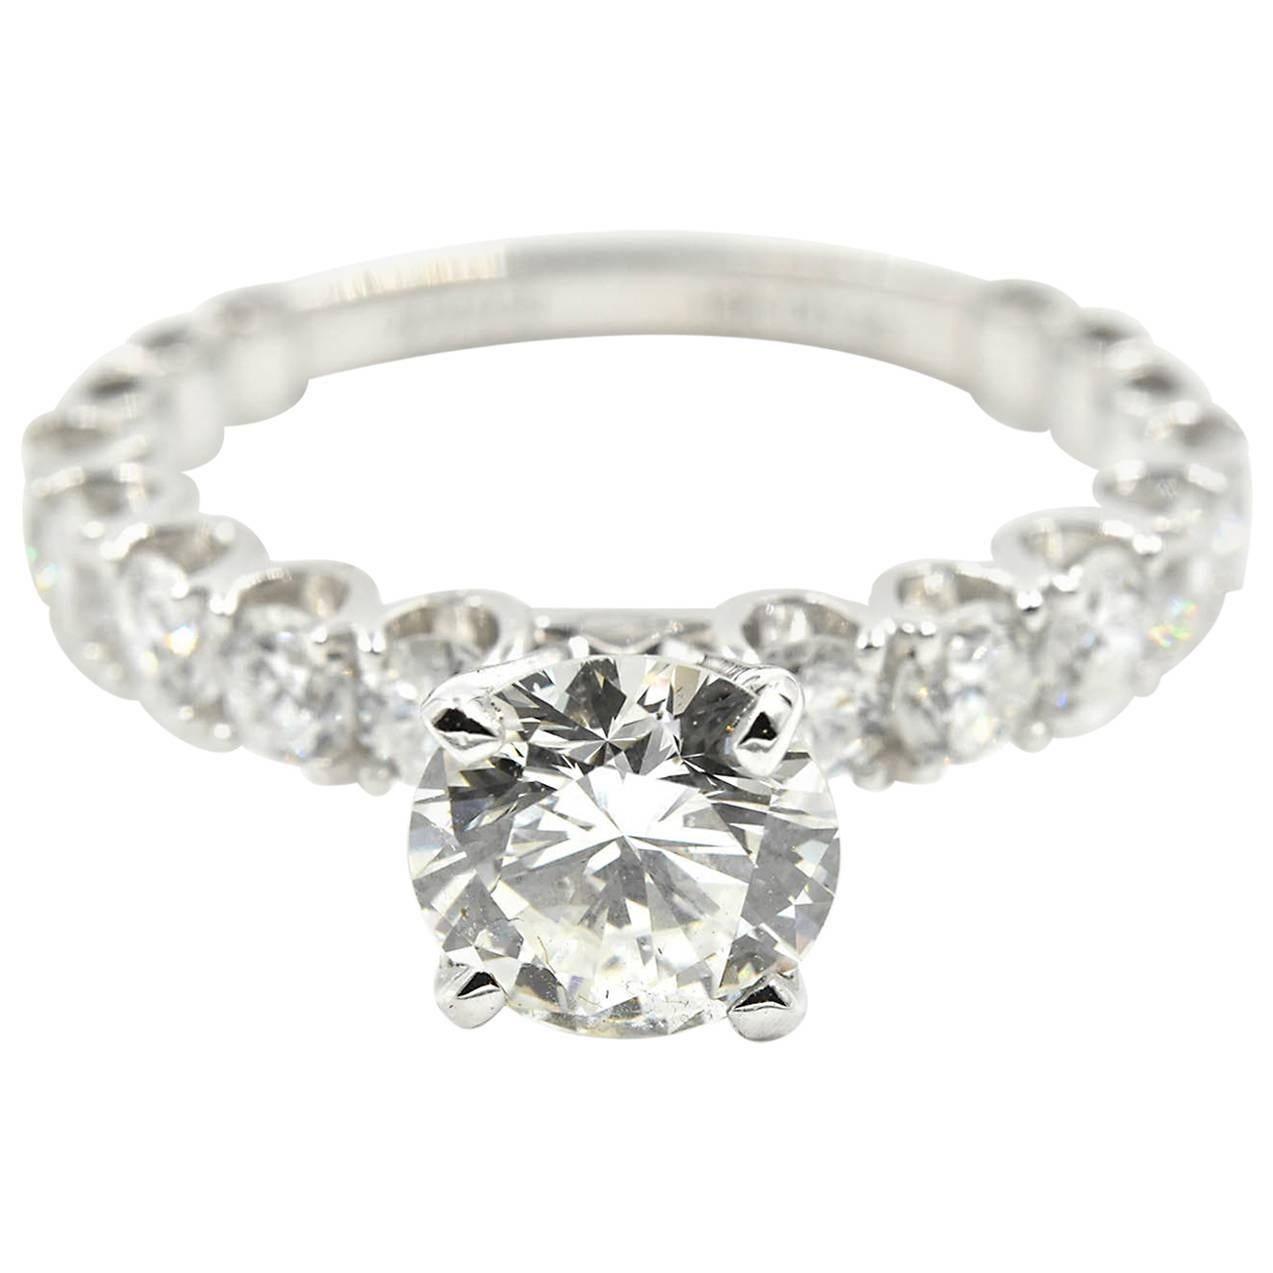 1.17 Carat Round Brilliant Diamond Engagement Ring 18 Karat White Gold